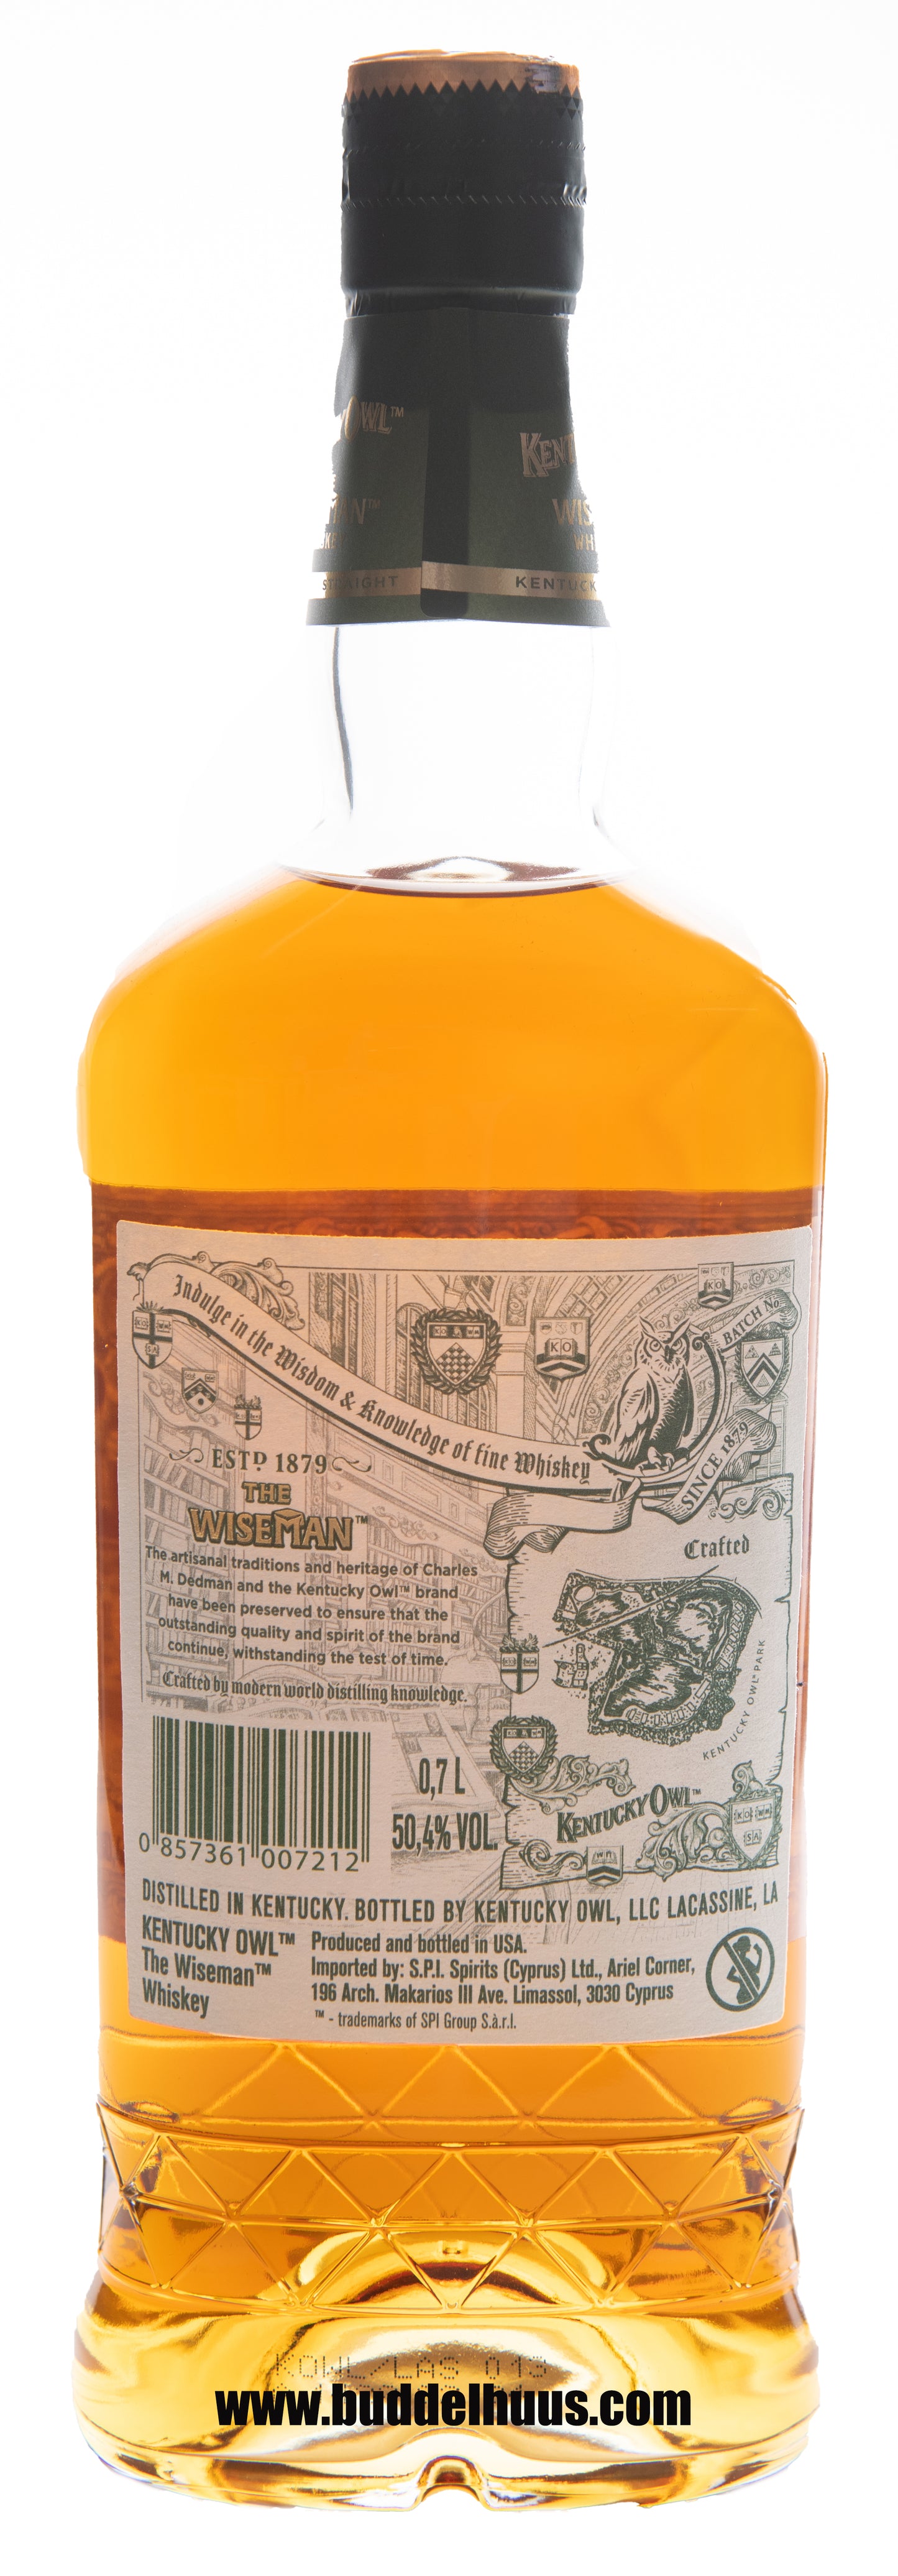 Kentucky Owl Wiseman`s Rye Whiskey